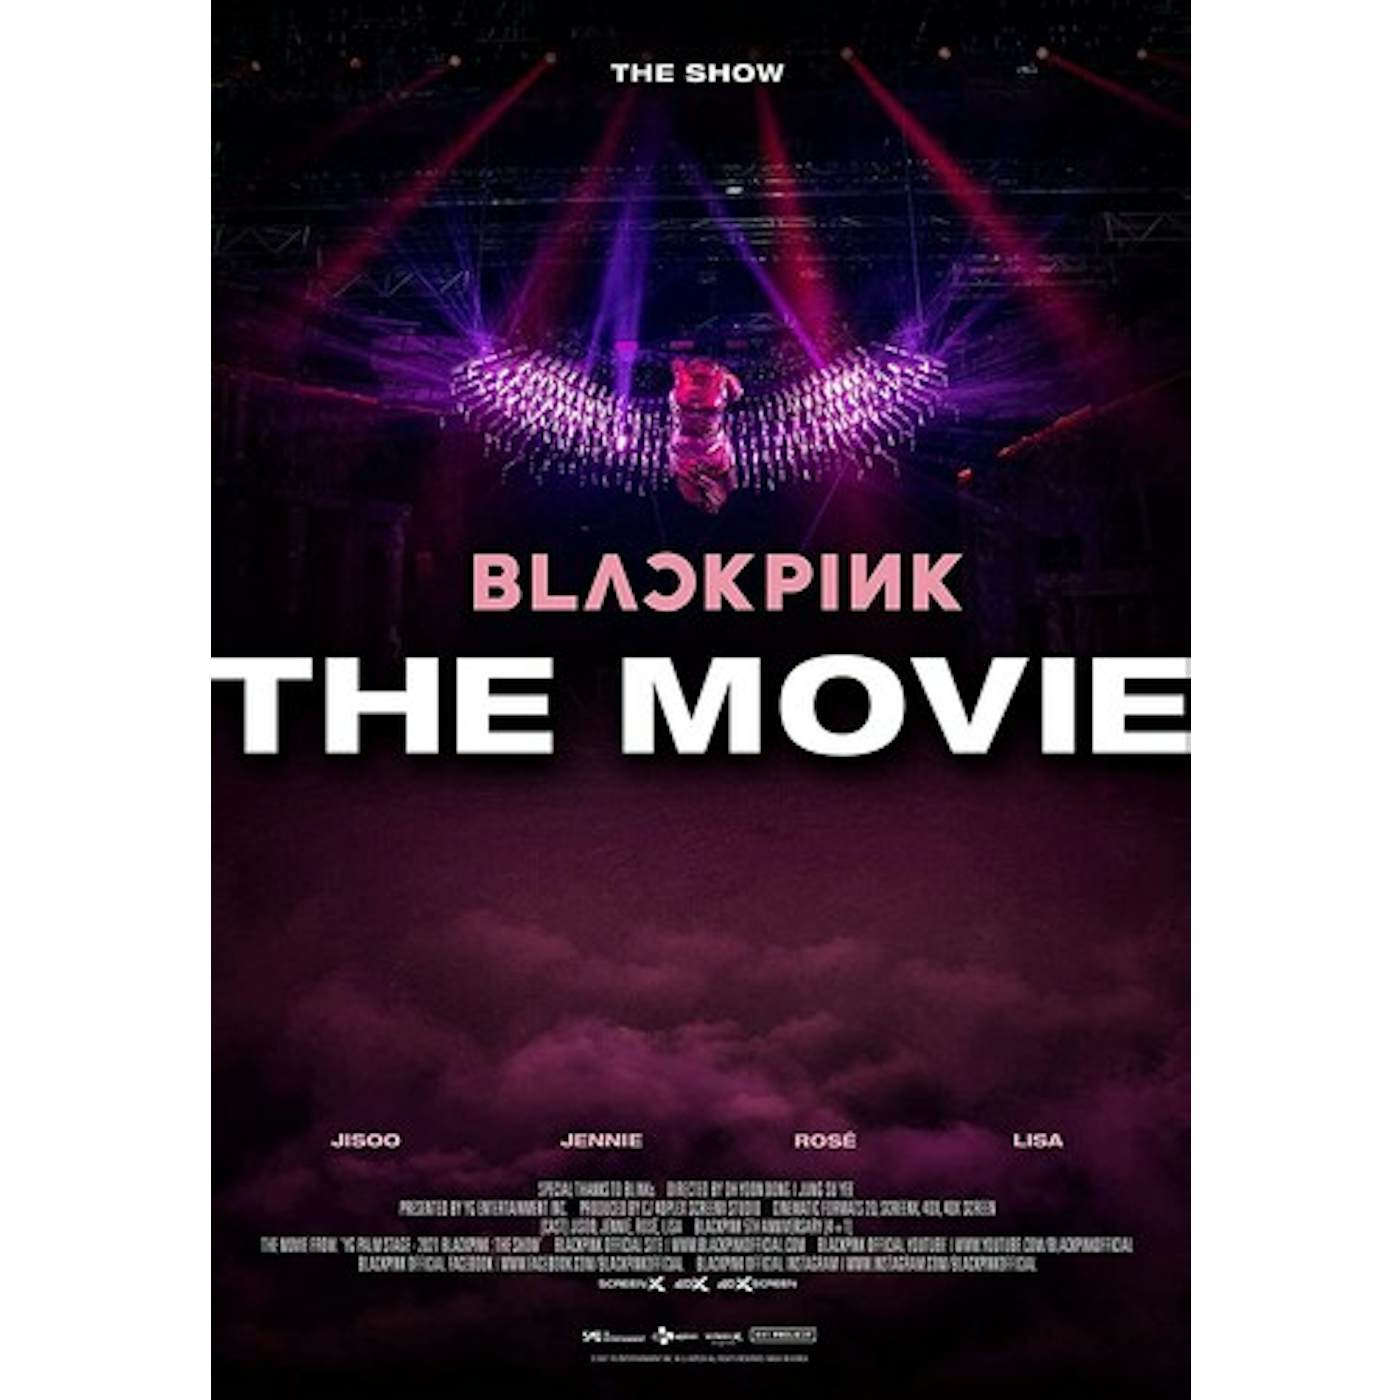 BLACKPINK Blu-ray